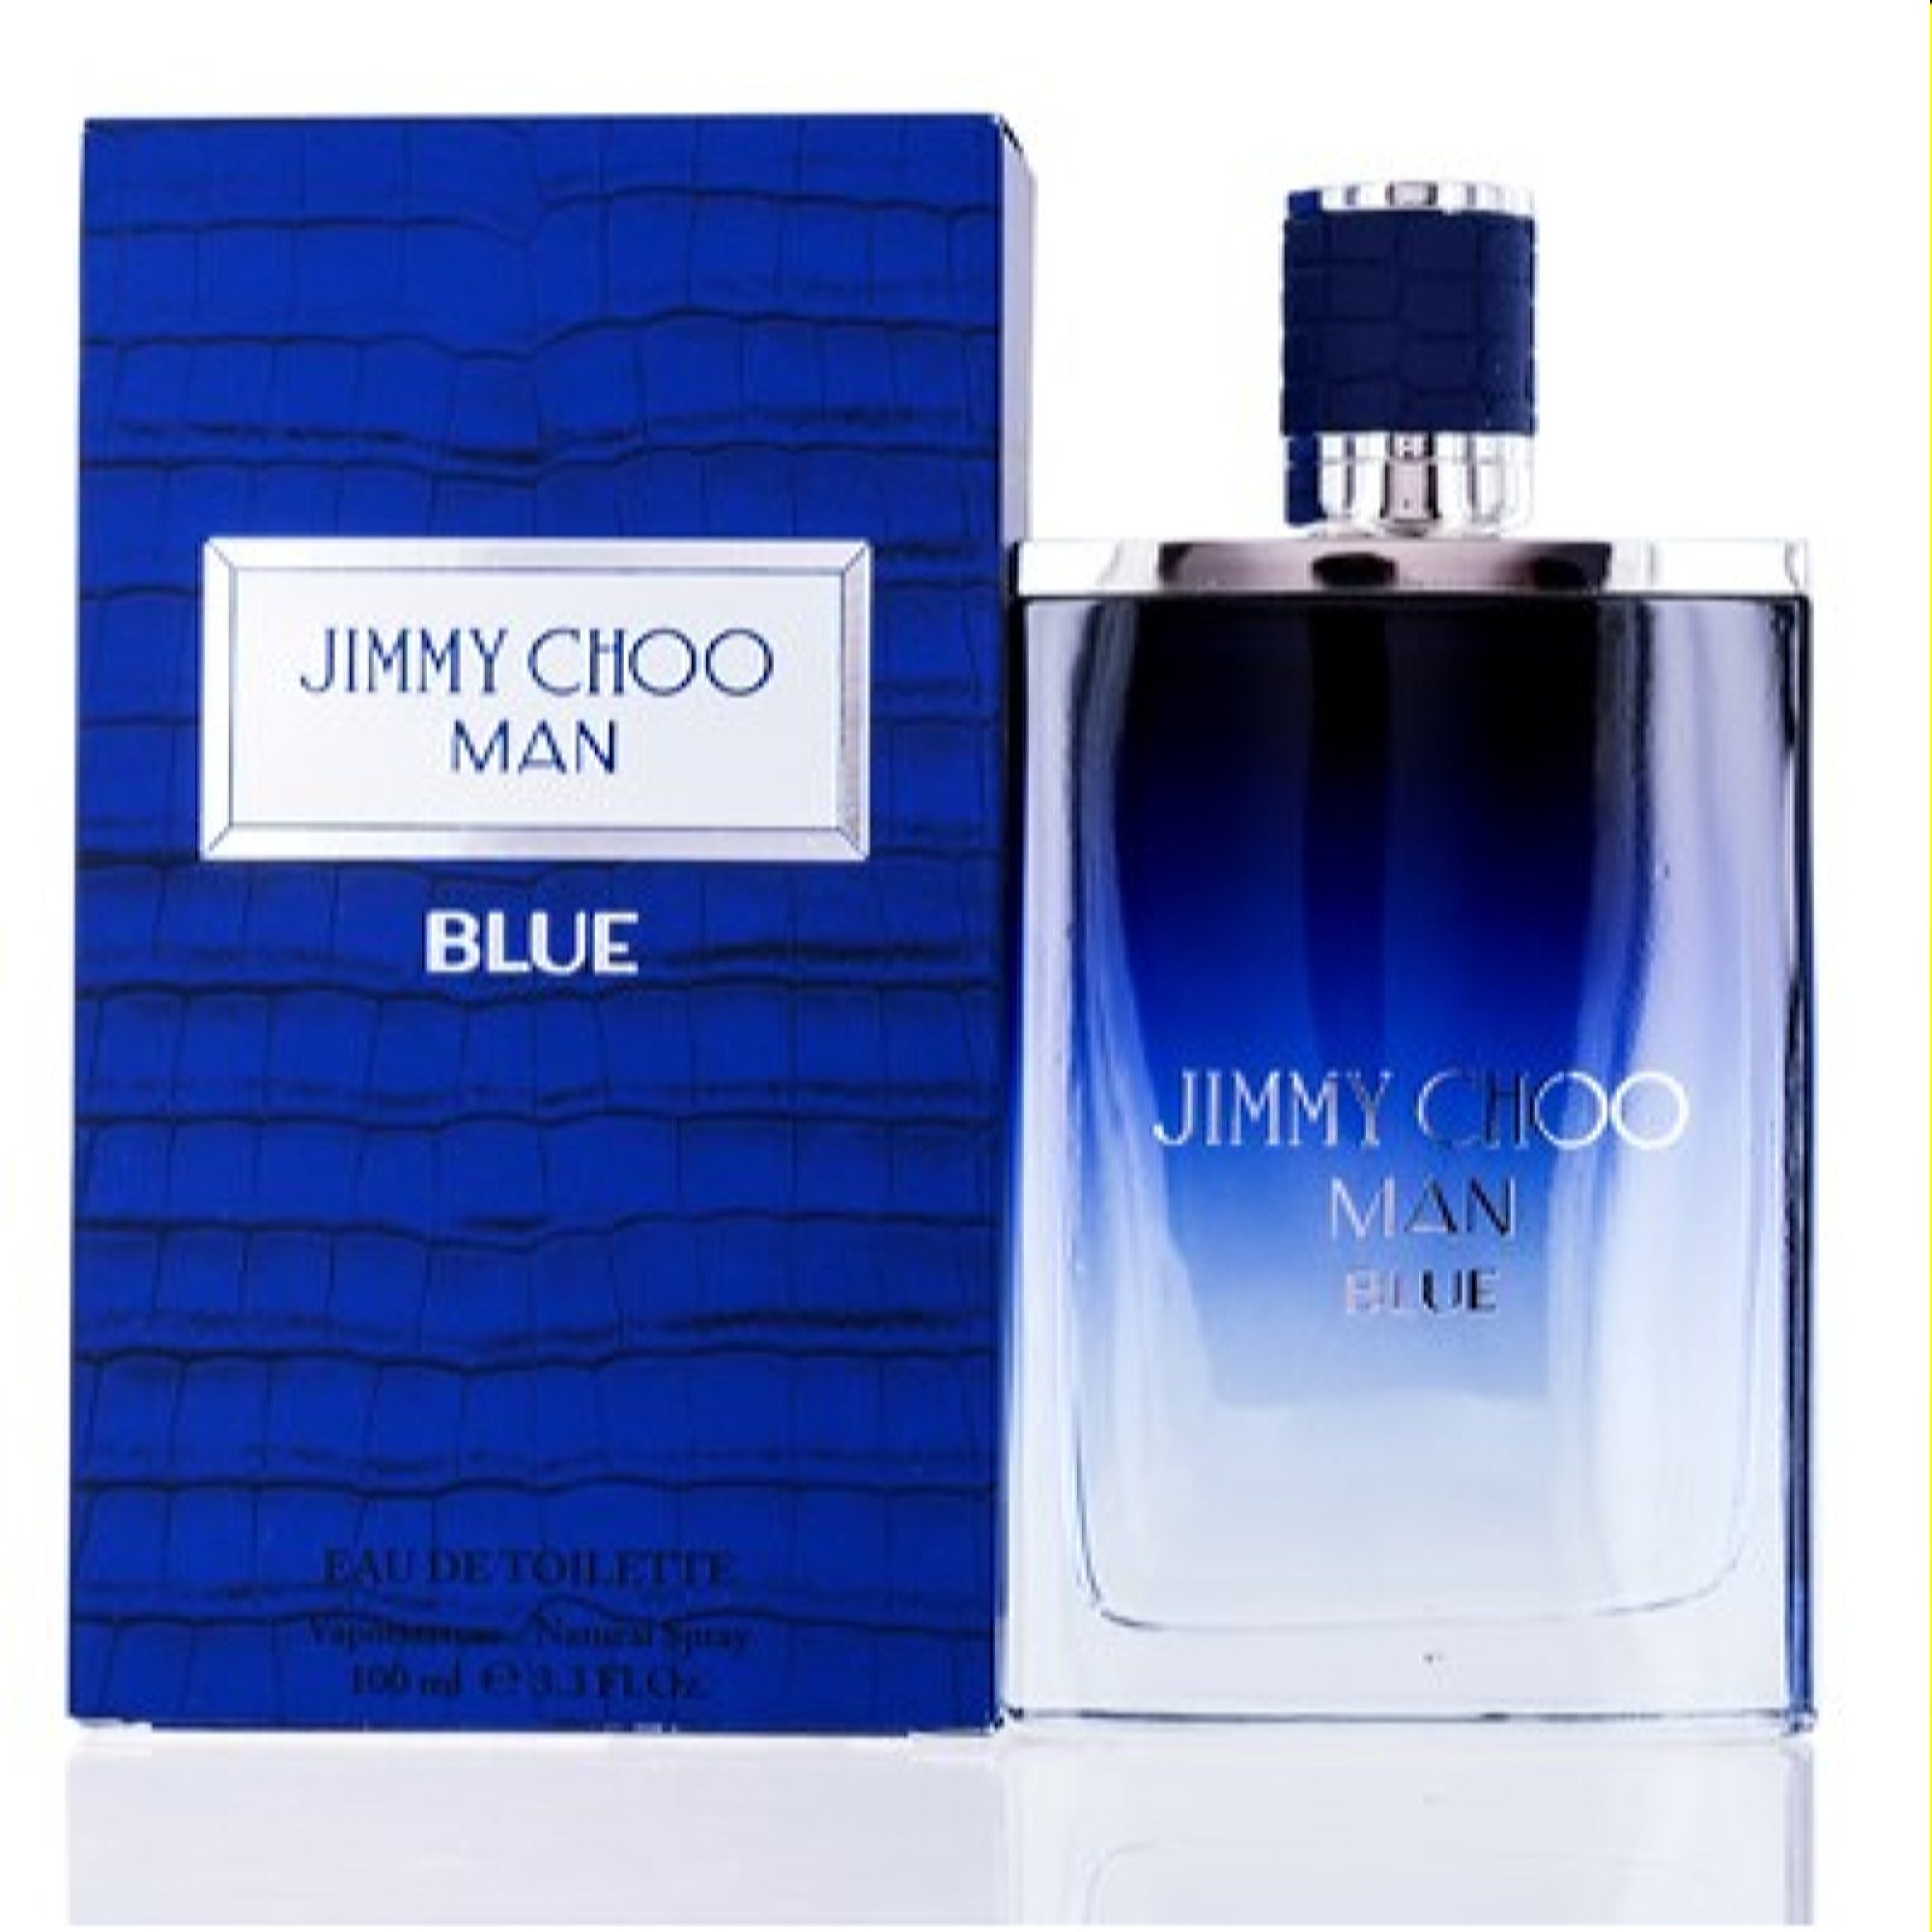 Jimmy Choo Men's Jimmy Choo Man Blue Jimmy Choo Edt Spray 3.3 Oz (100 Ml)  3386460067508